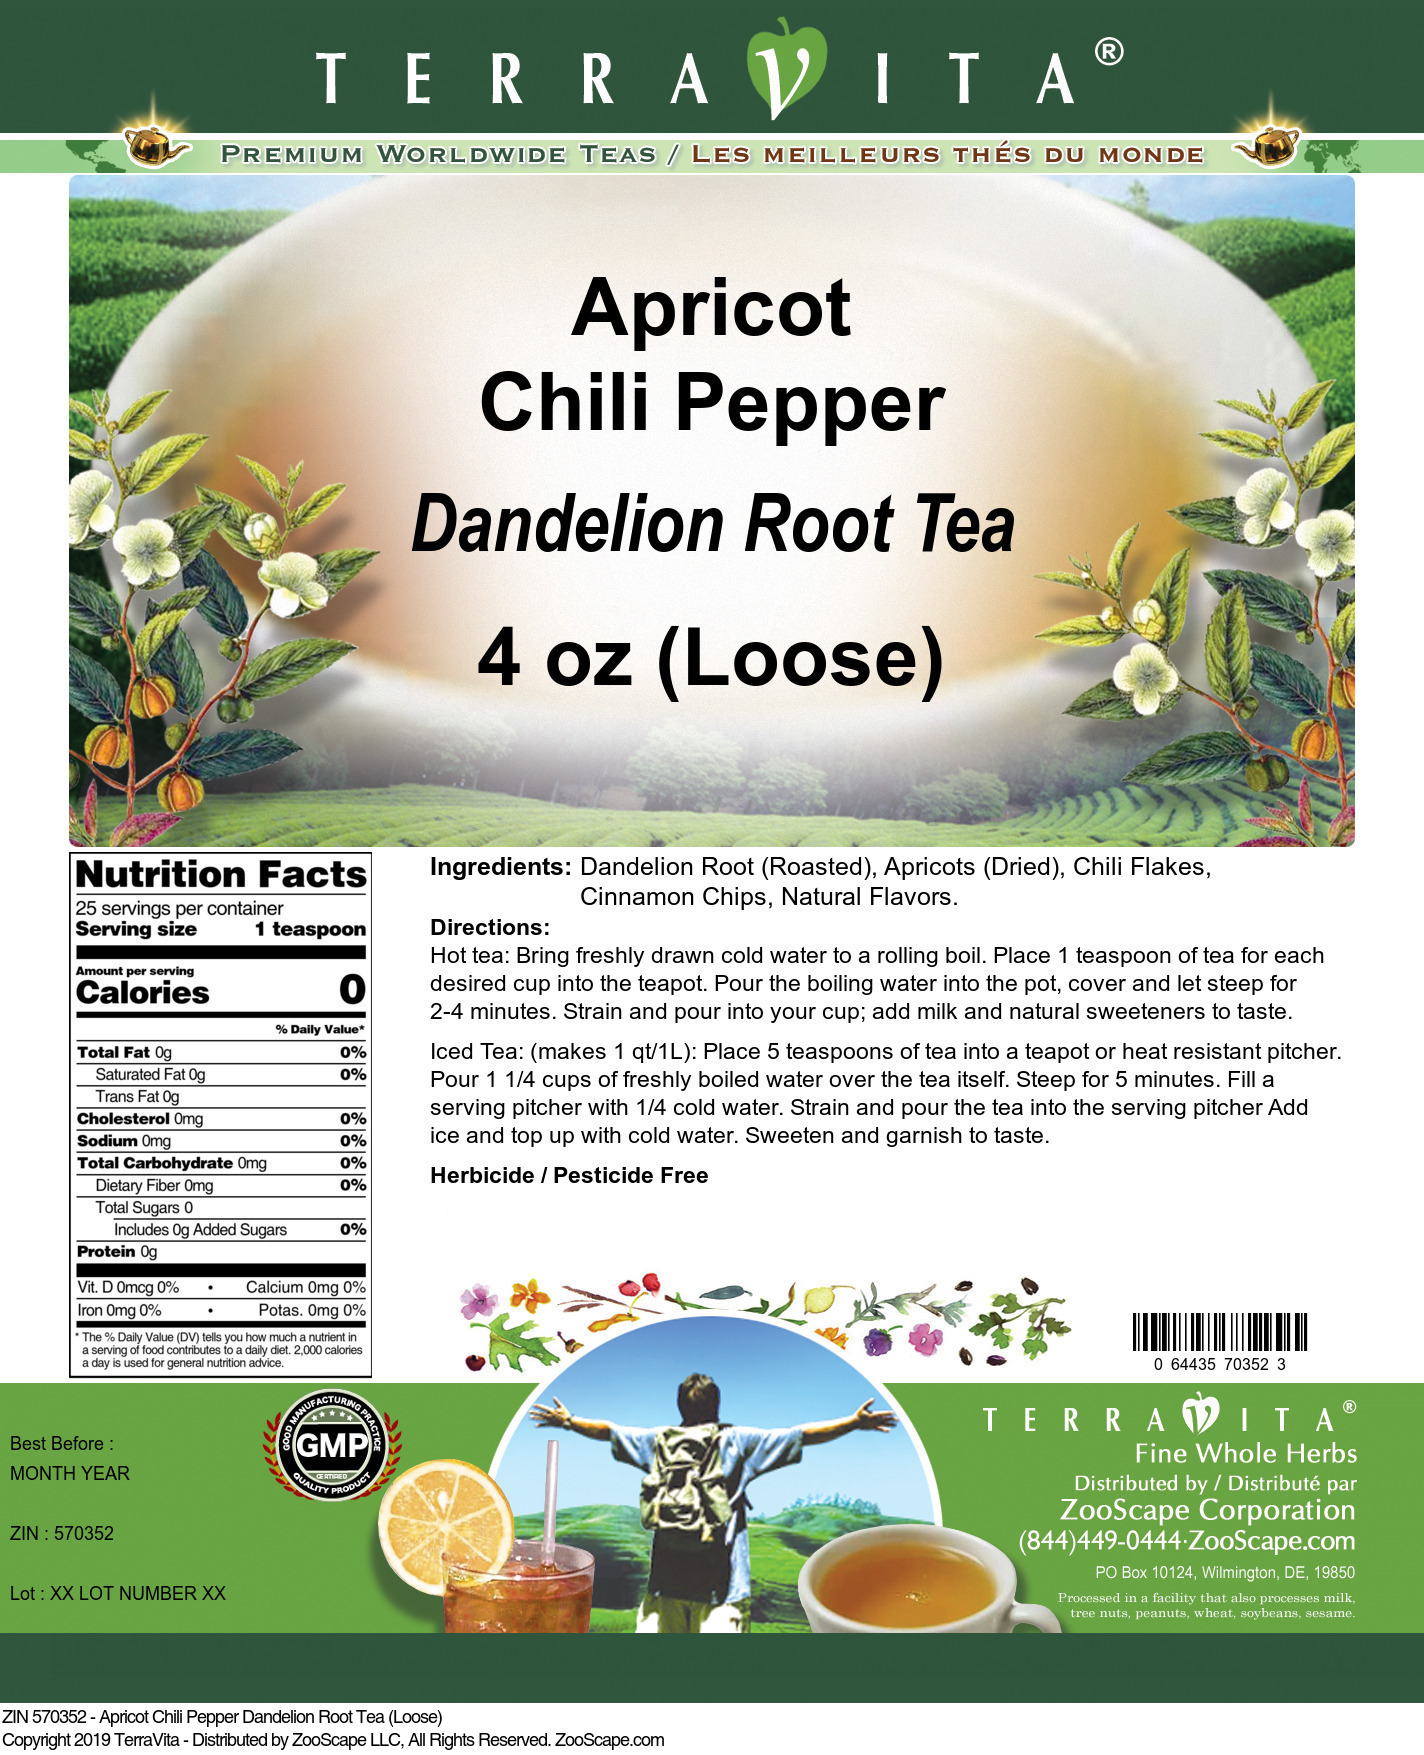 Apricot Chili Pepper Dandelion Root Tea (Loose) - Label